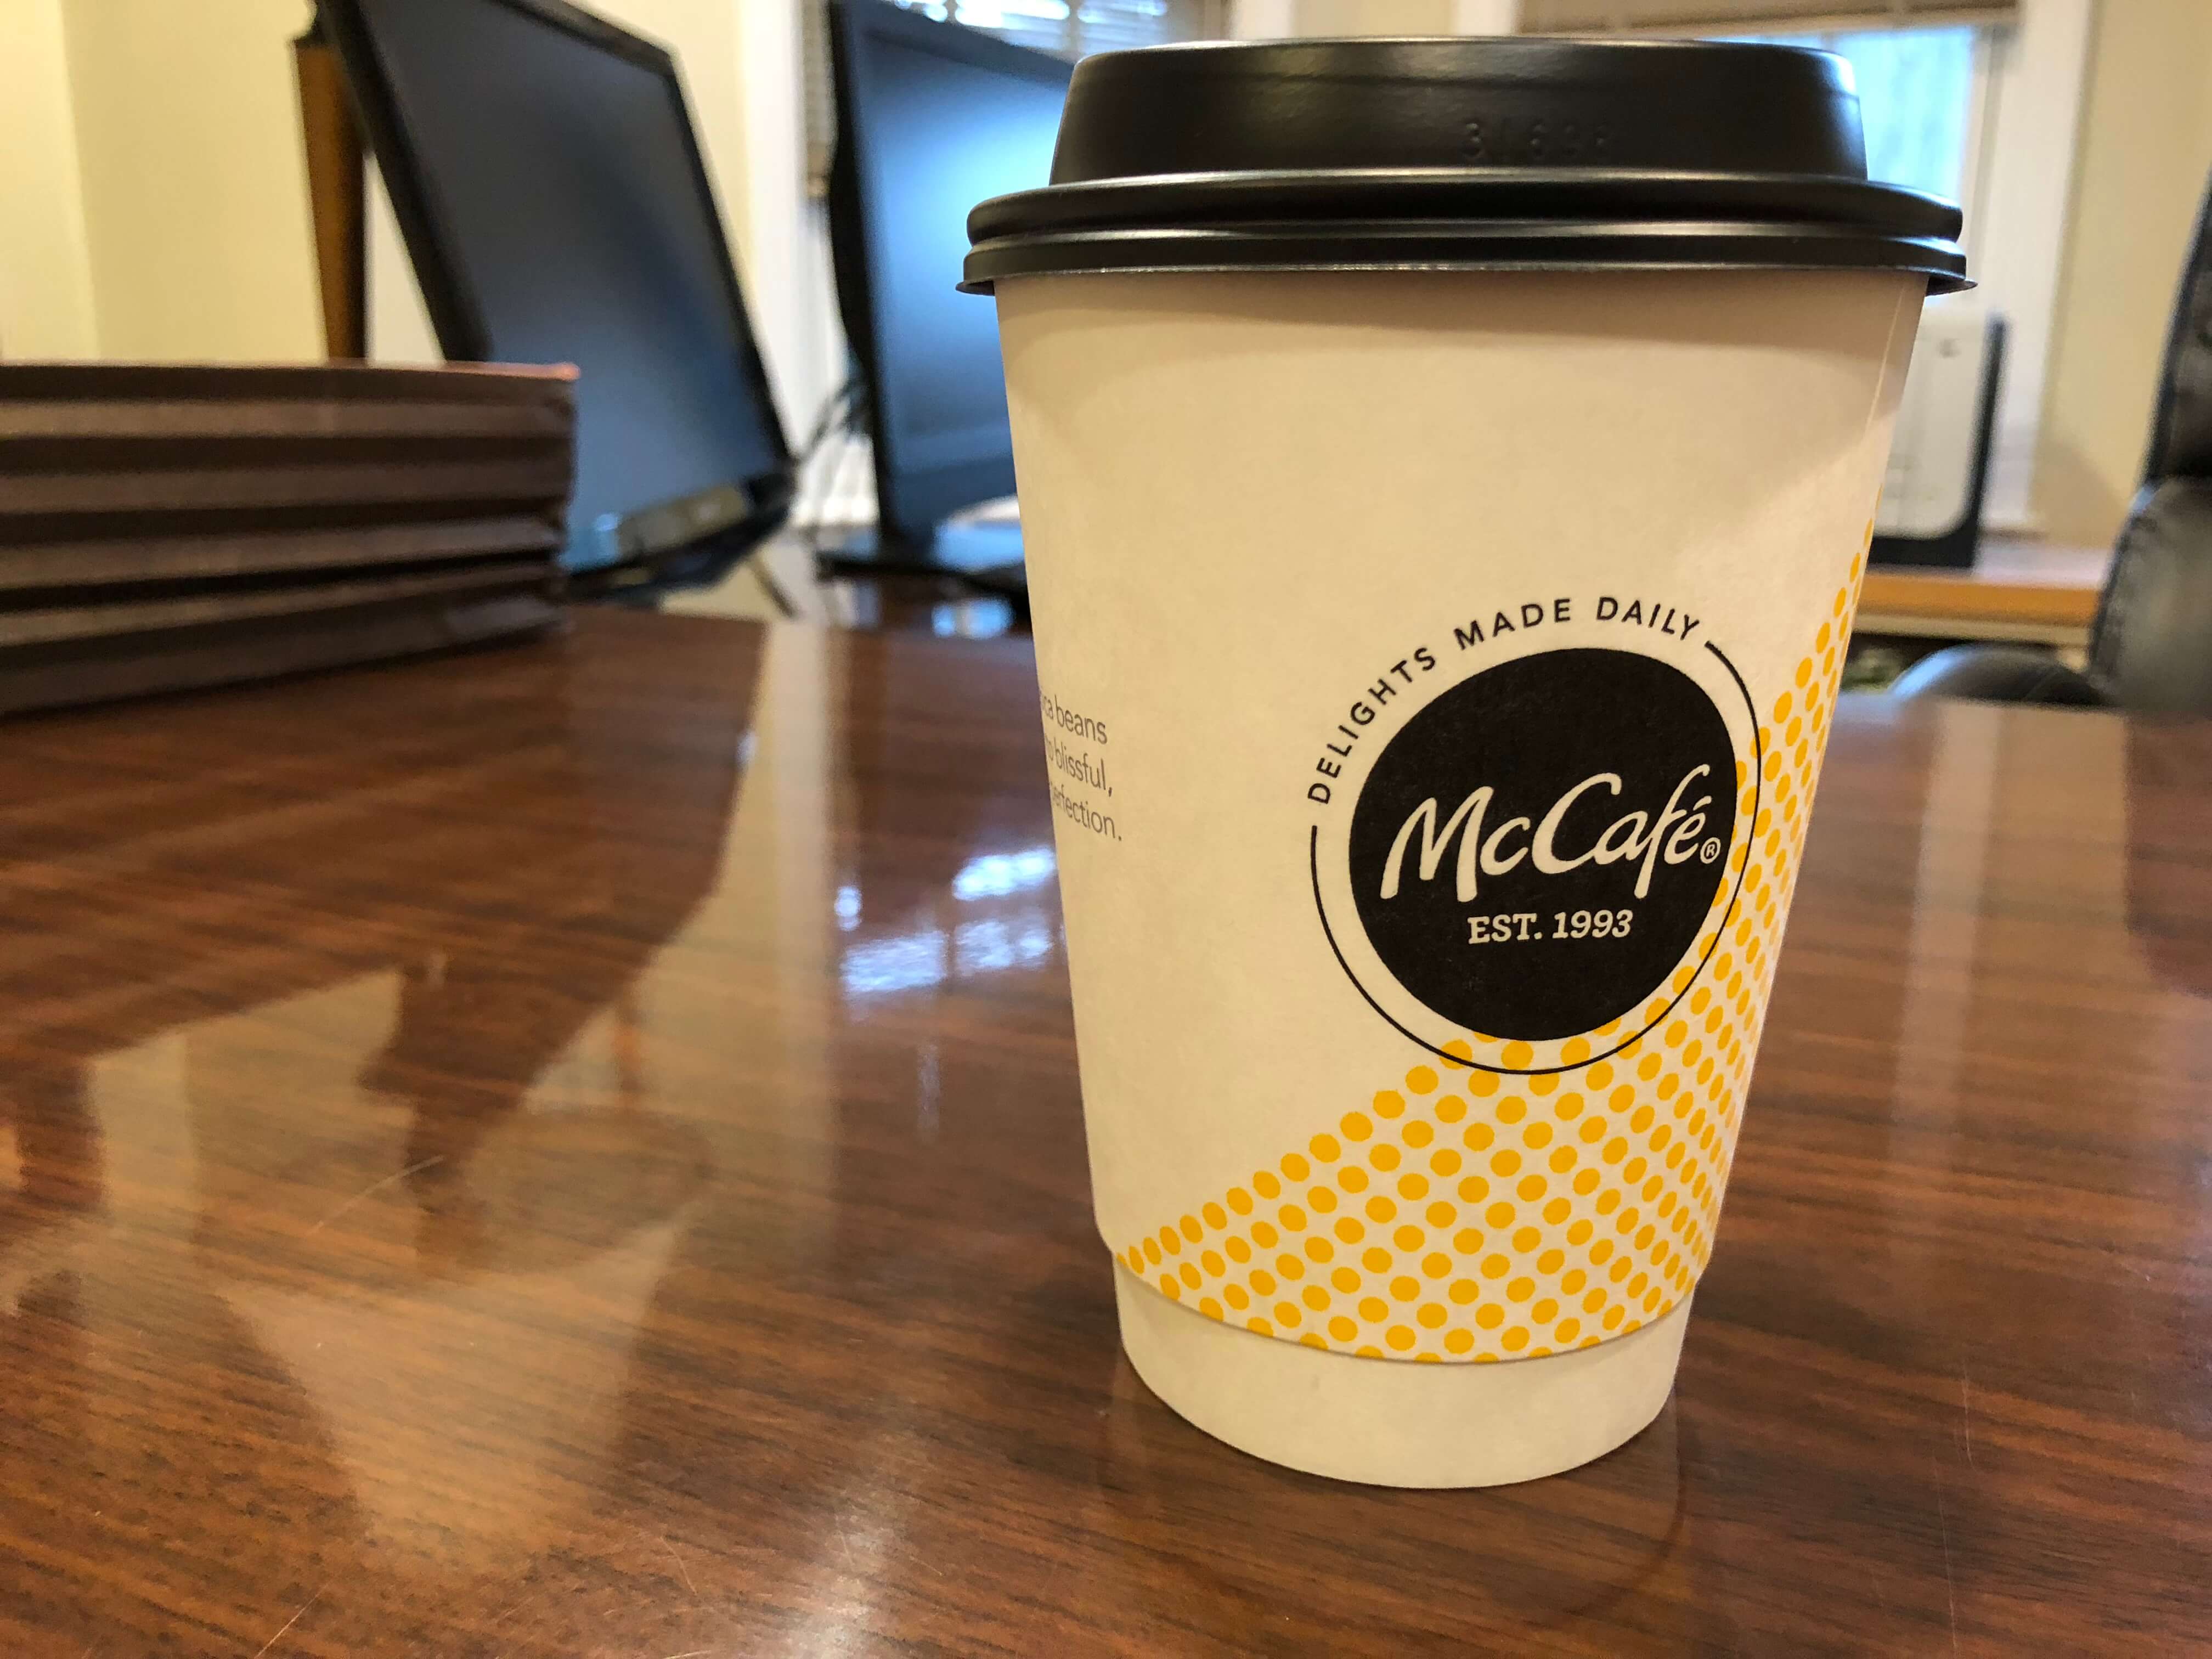 mcdonald's hot coffee case study